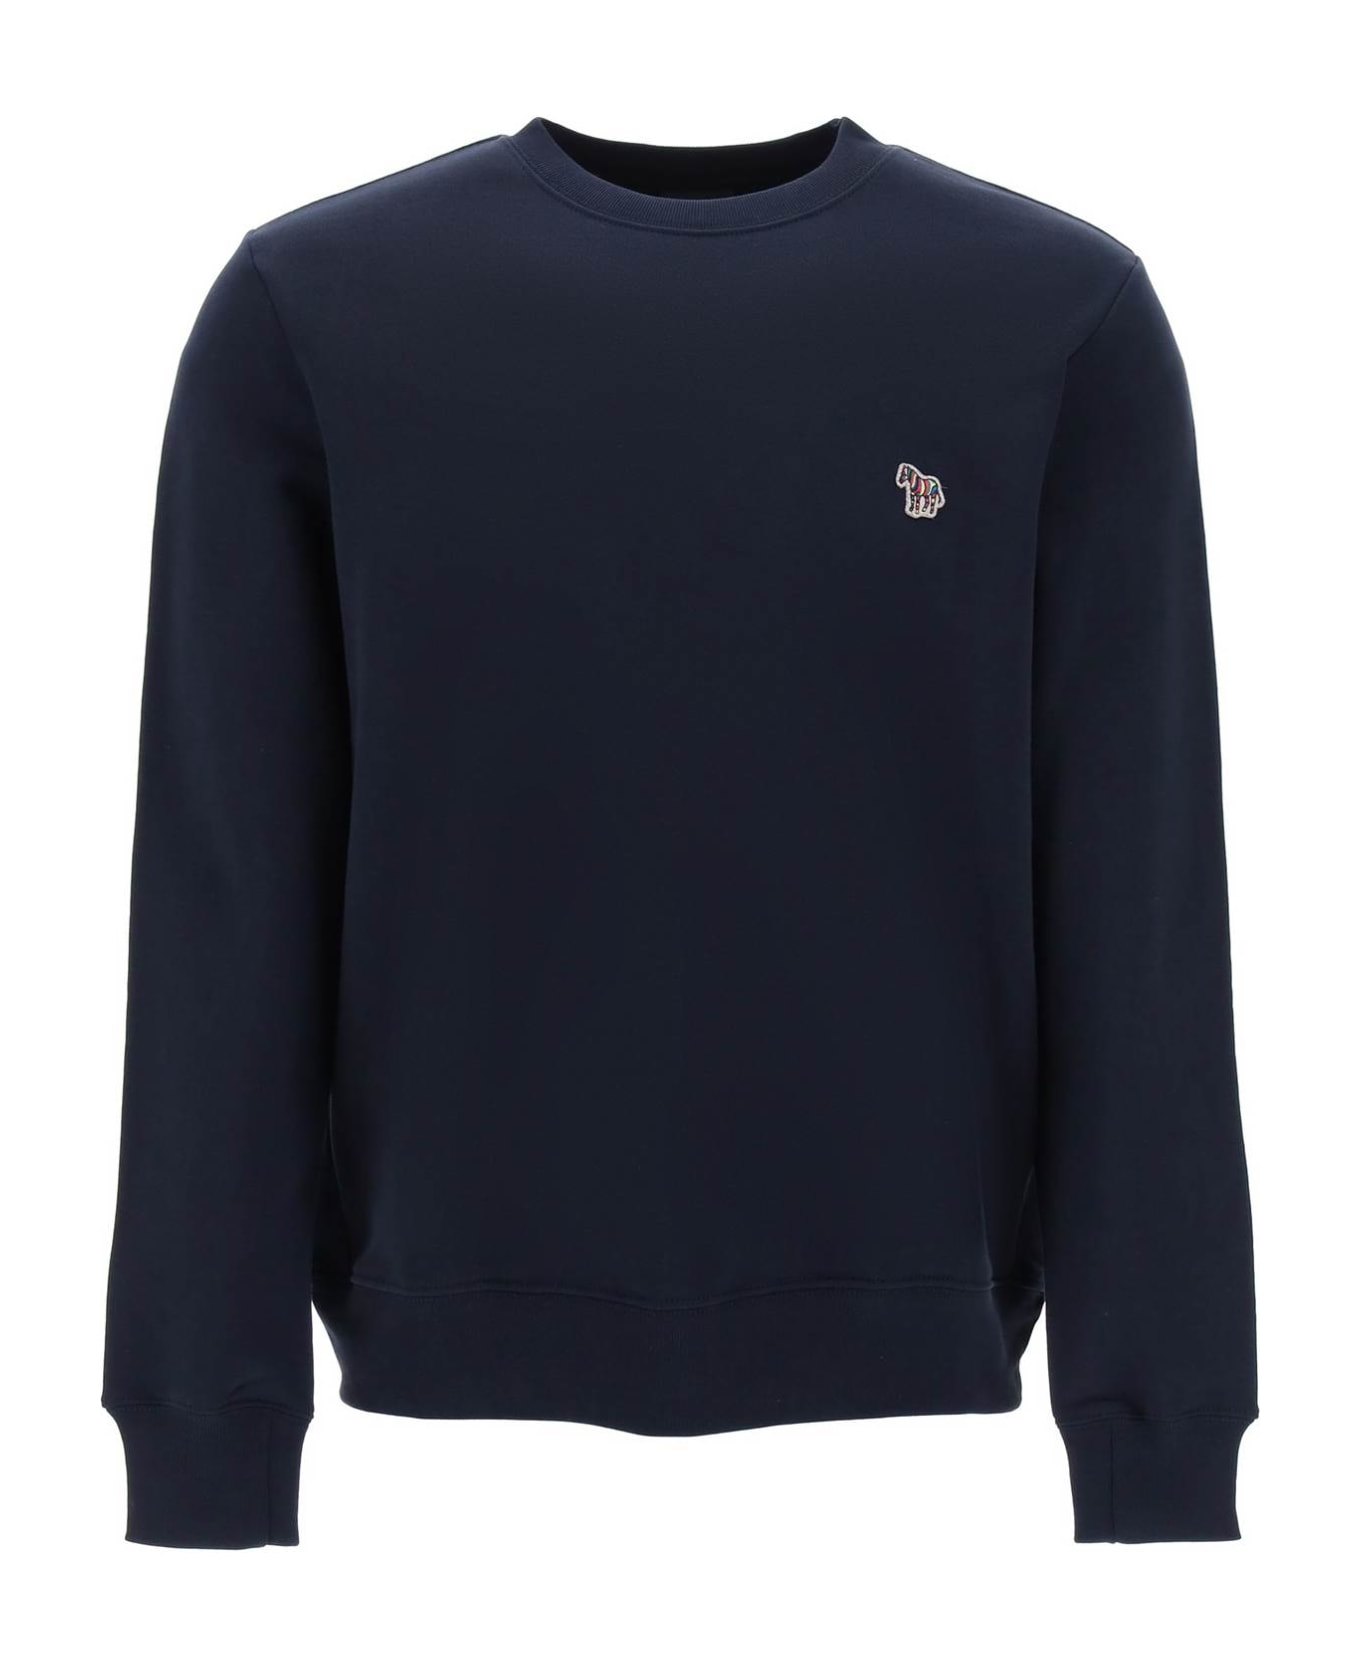 Paul Smith Zebra Logo Sweatshirt In Organic Cotton - VERY DARK NAVY (Blue)